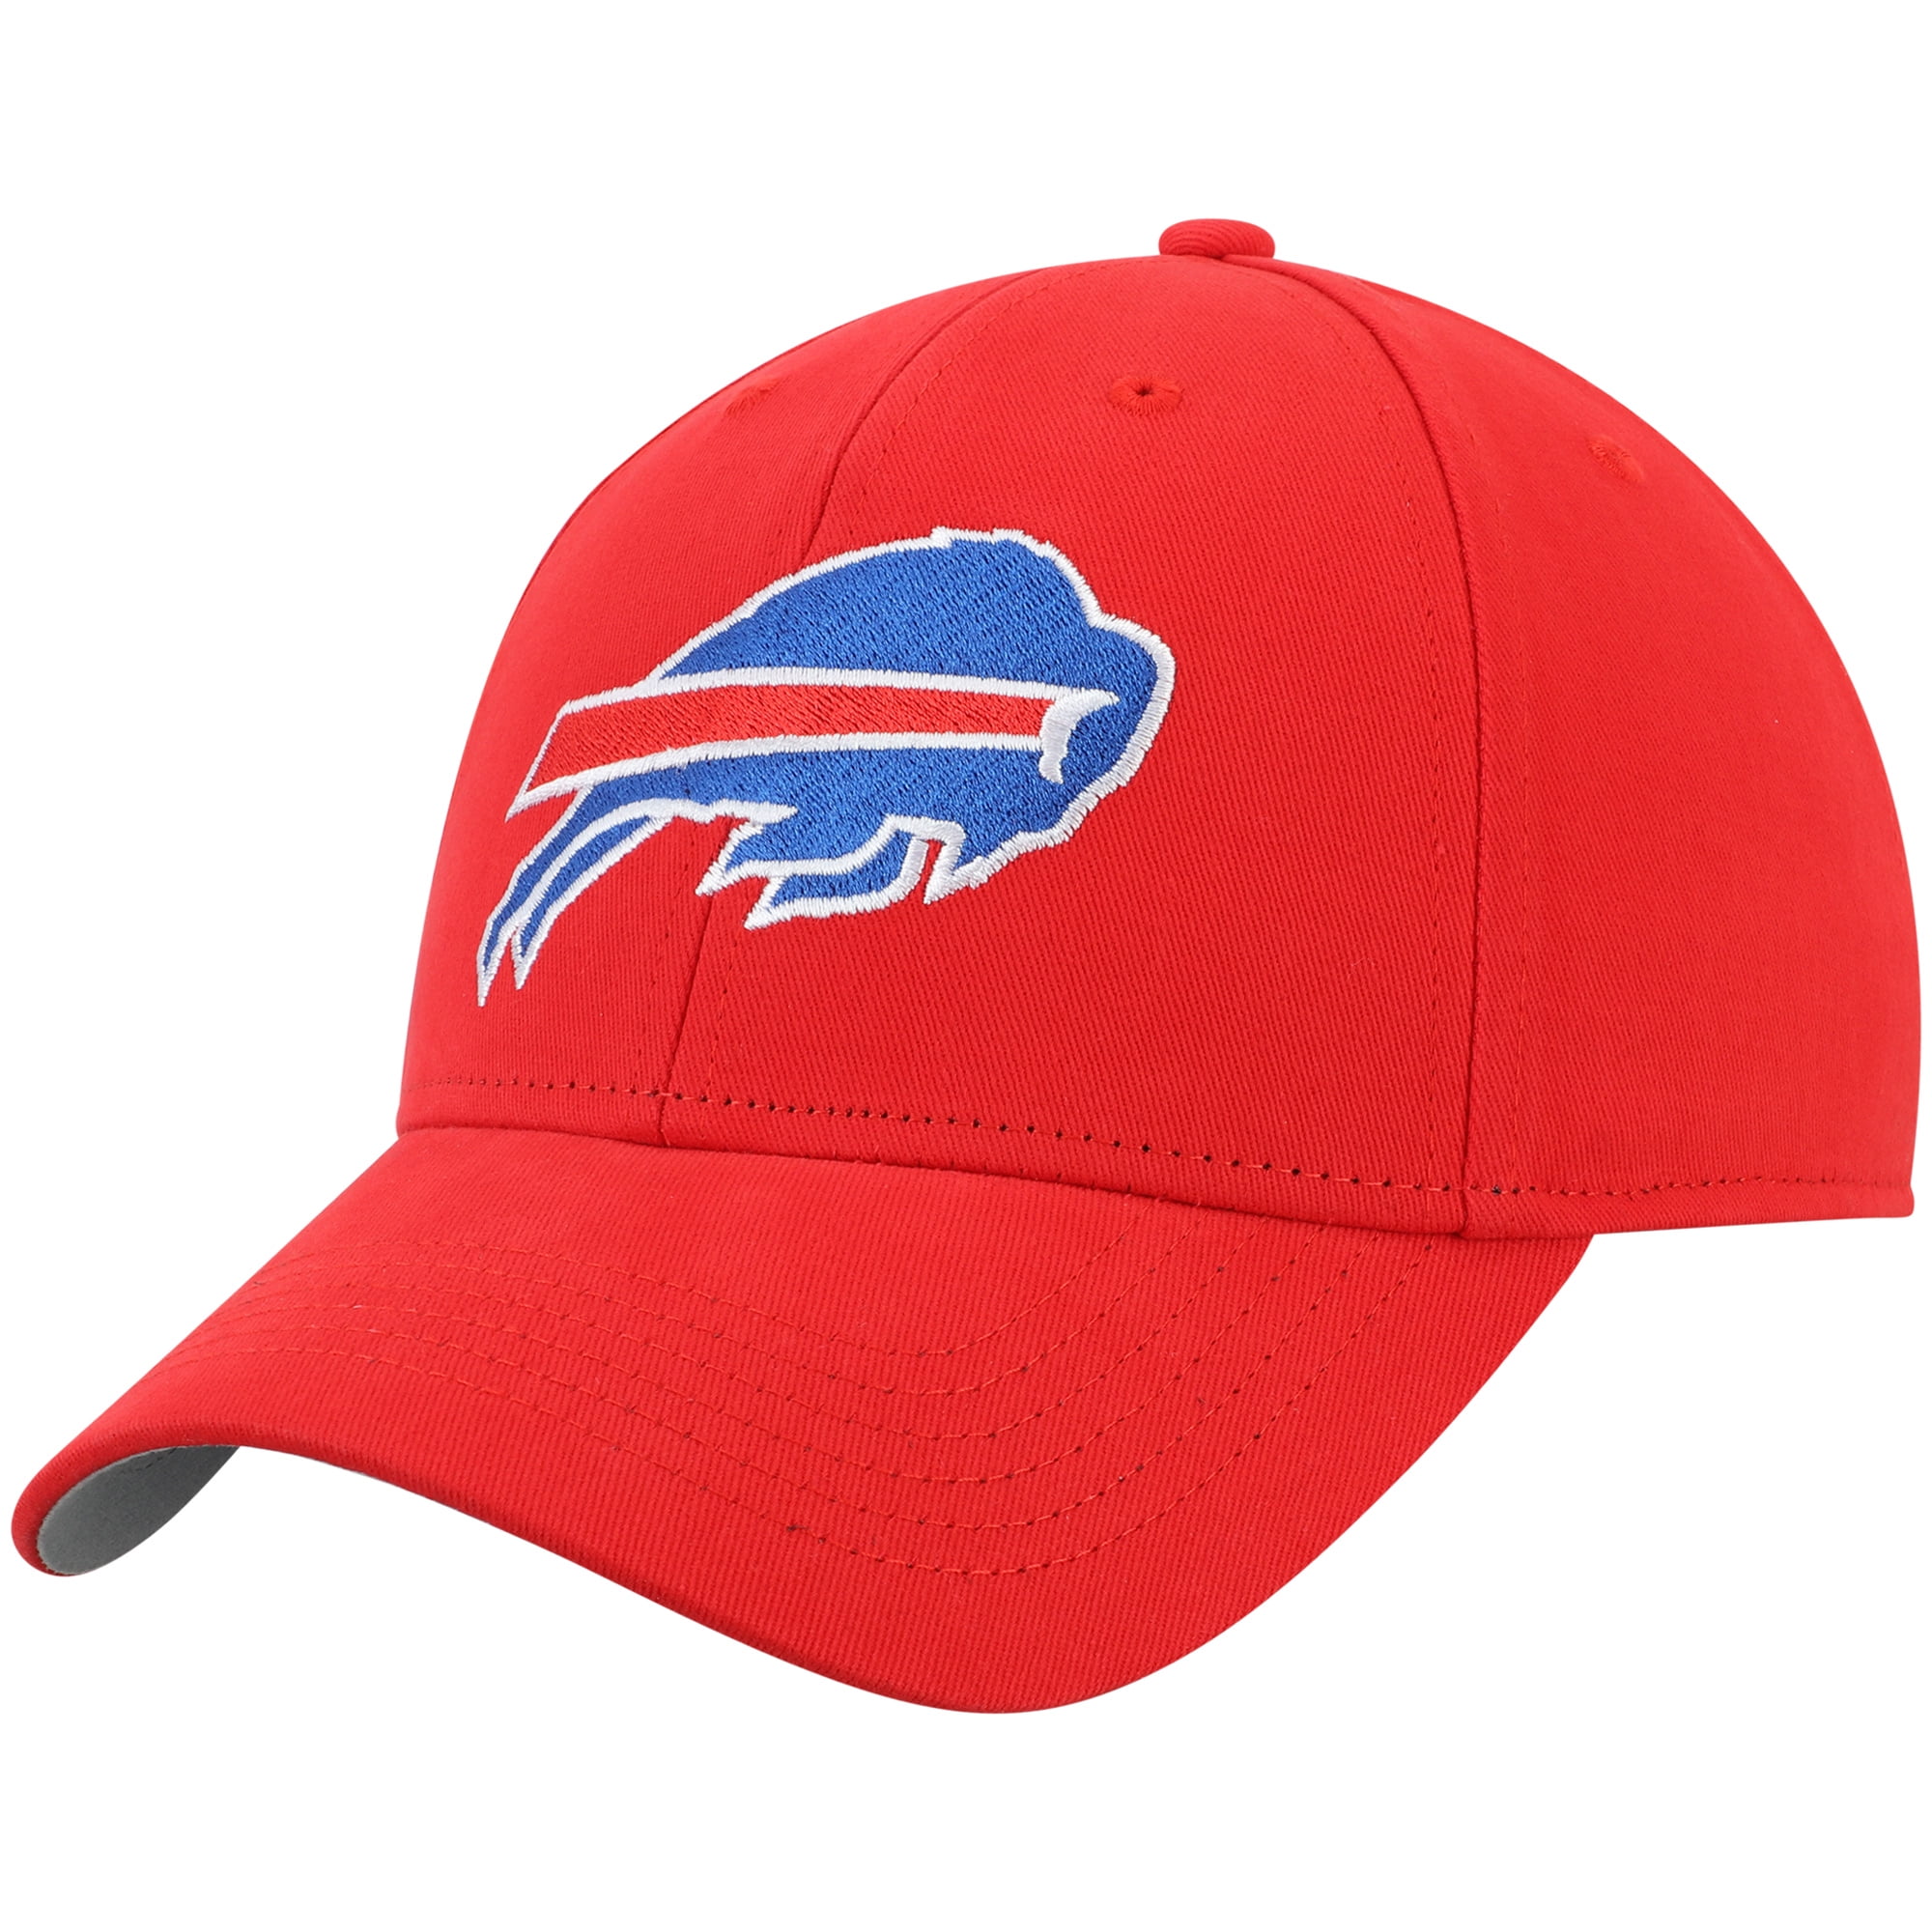 Buffalo Bills Basic Alternate Adjustable Hat - Red - OSFA - Walmart.com